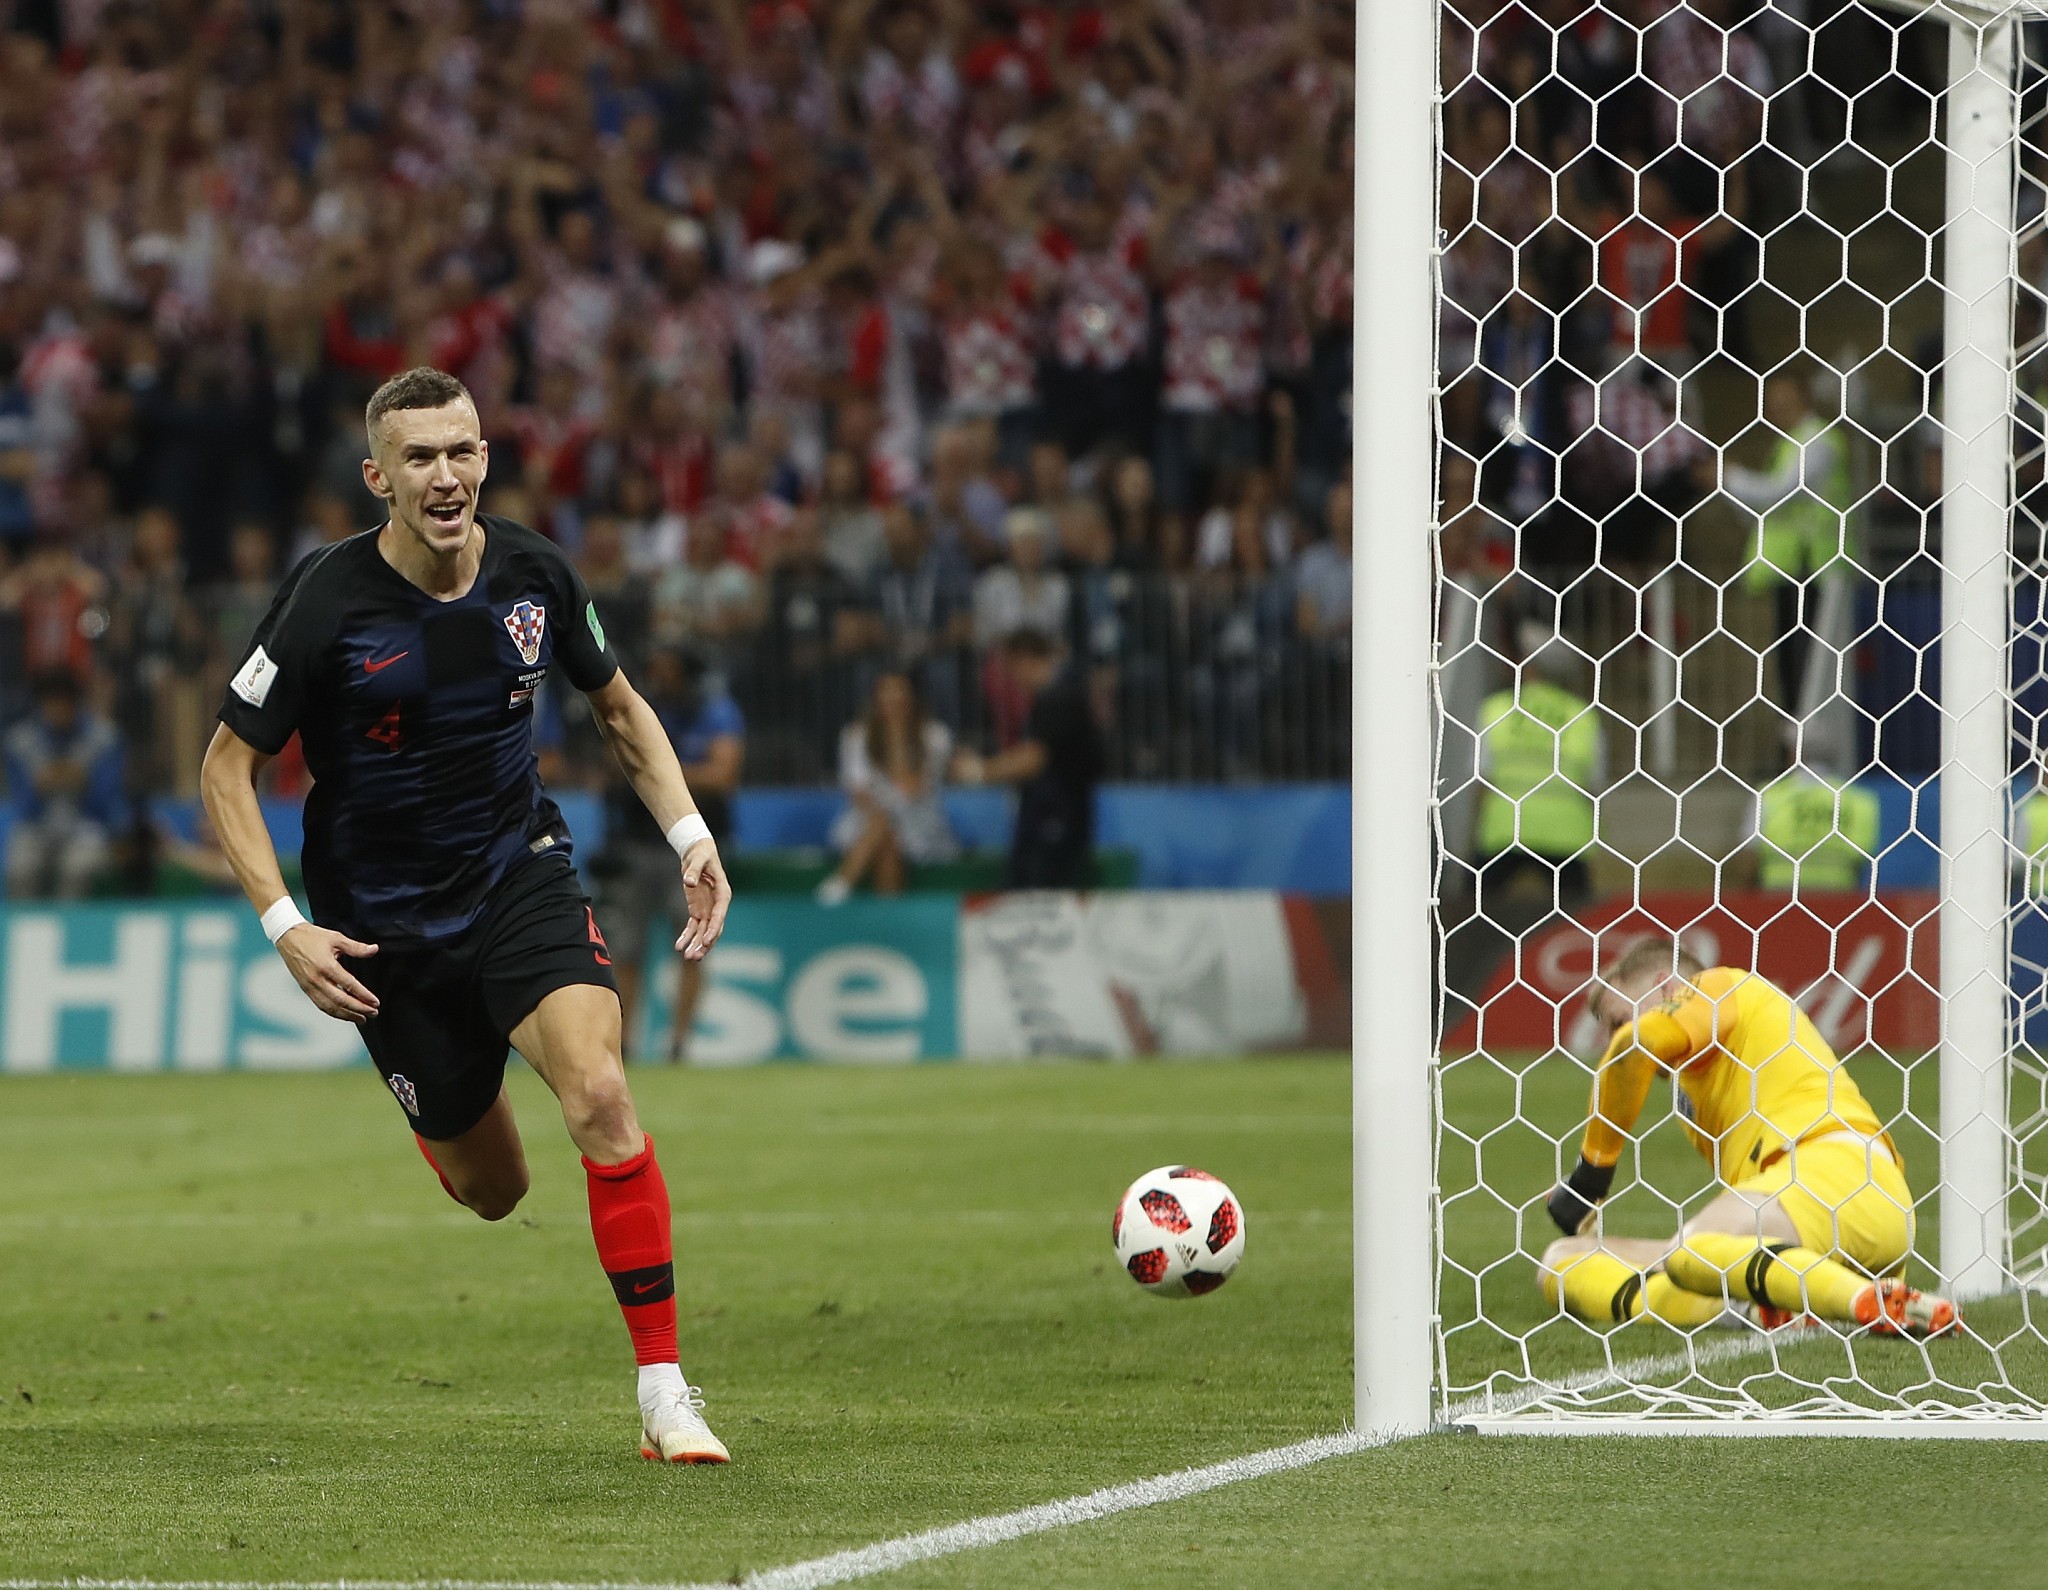 Croatia vs england